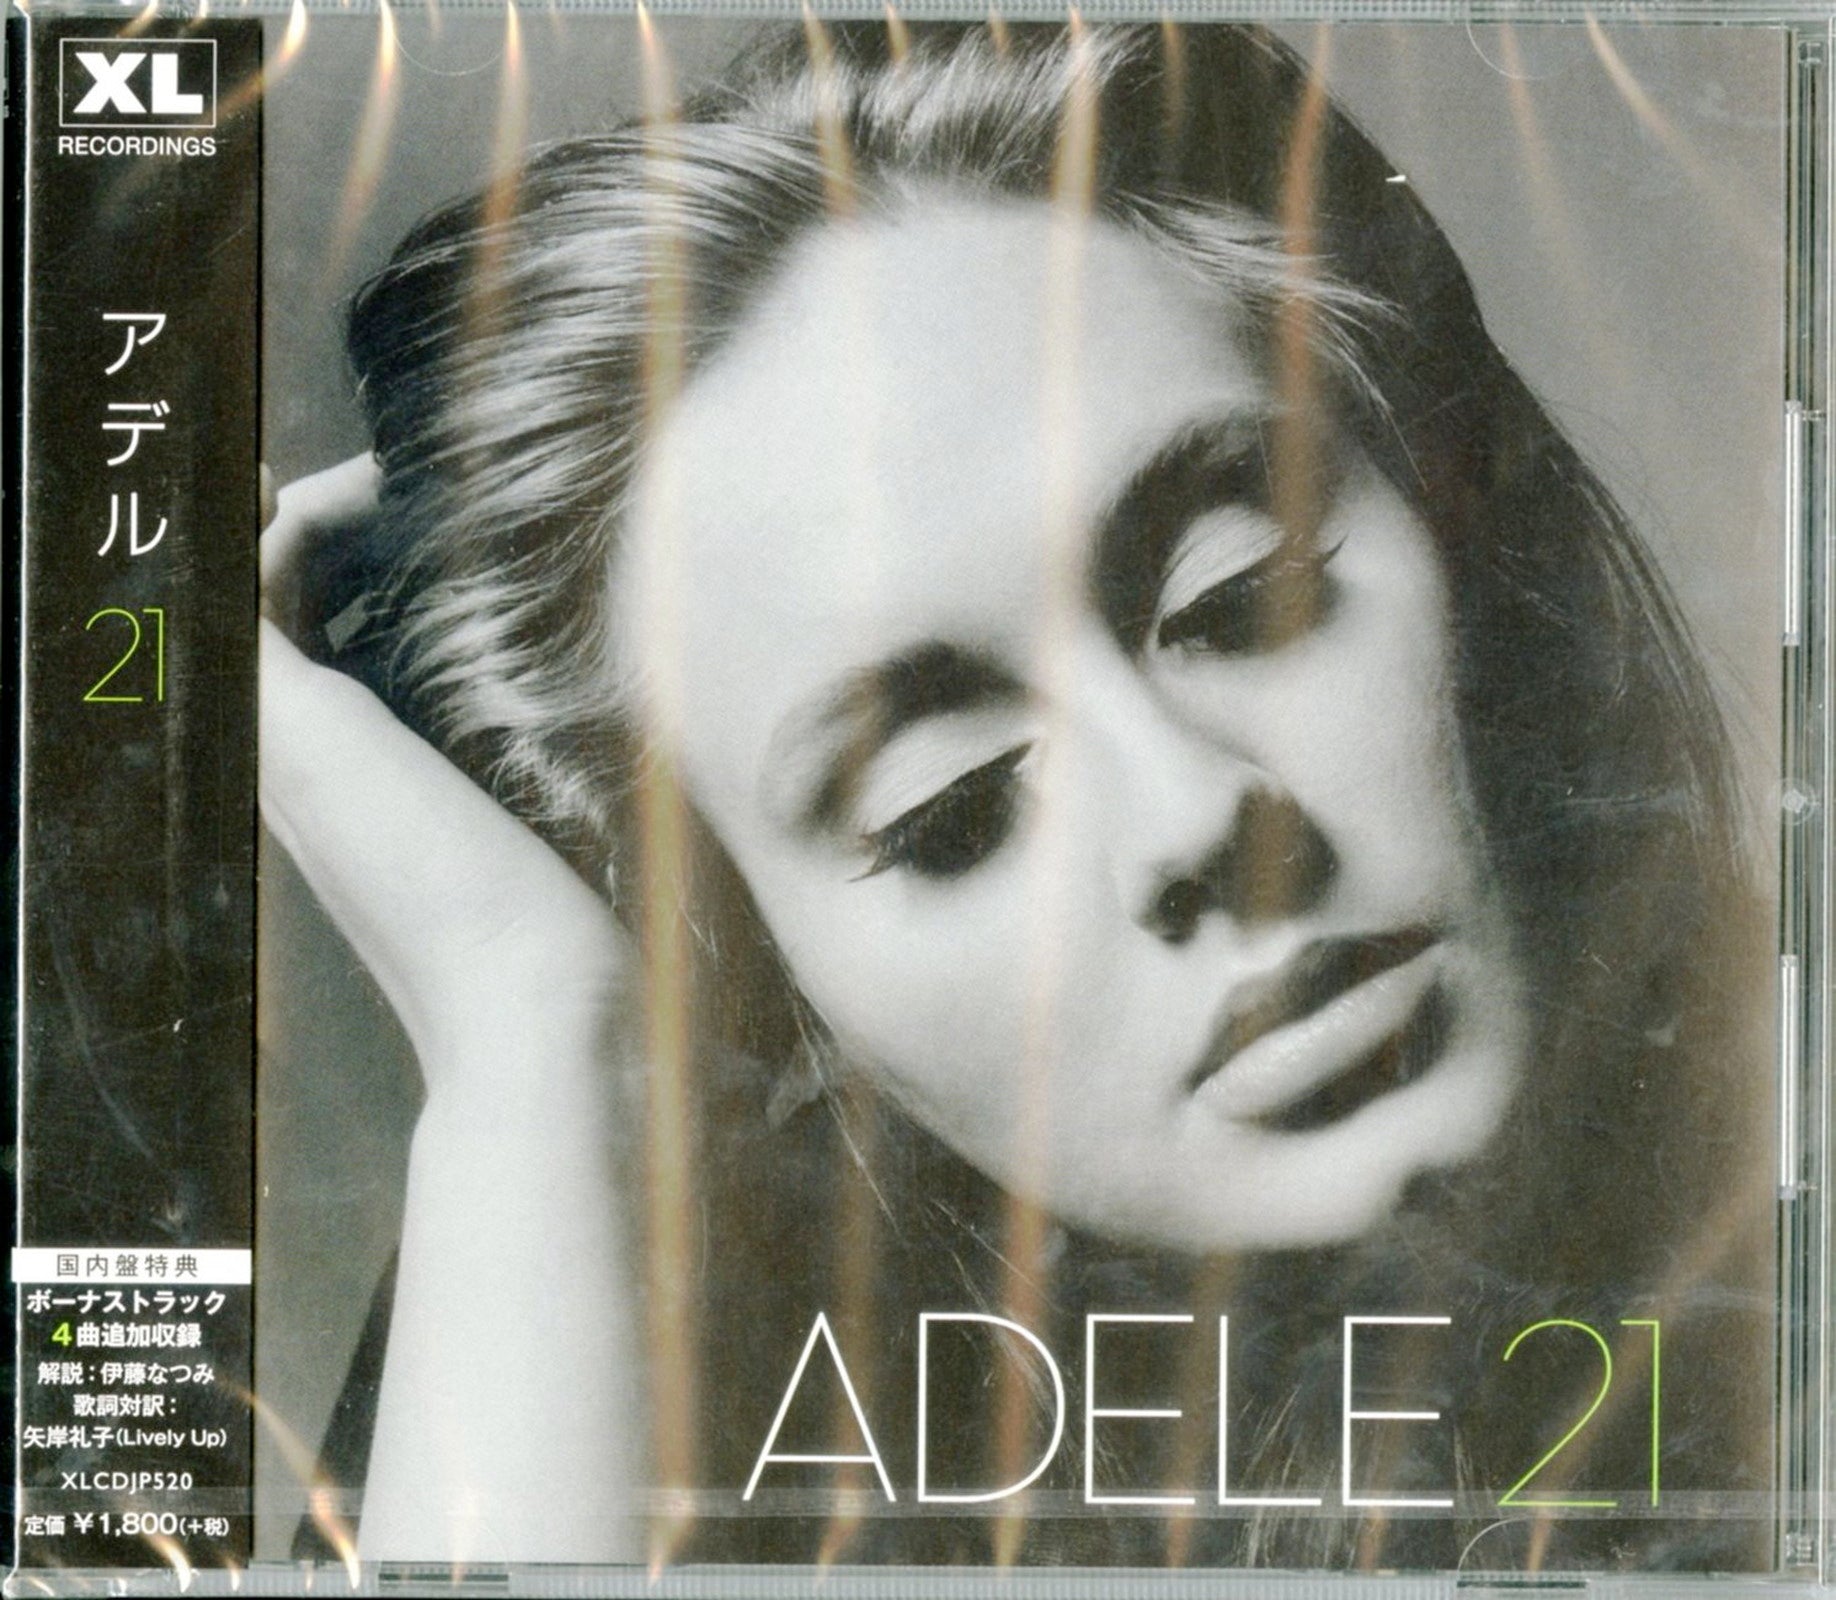 Adele - 21 - Import CD With Japan Obi – CDs Vinyl Japan Store